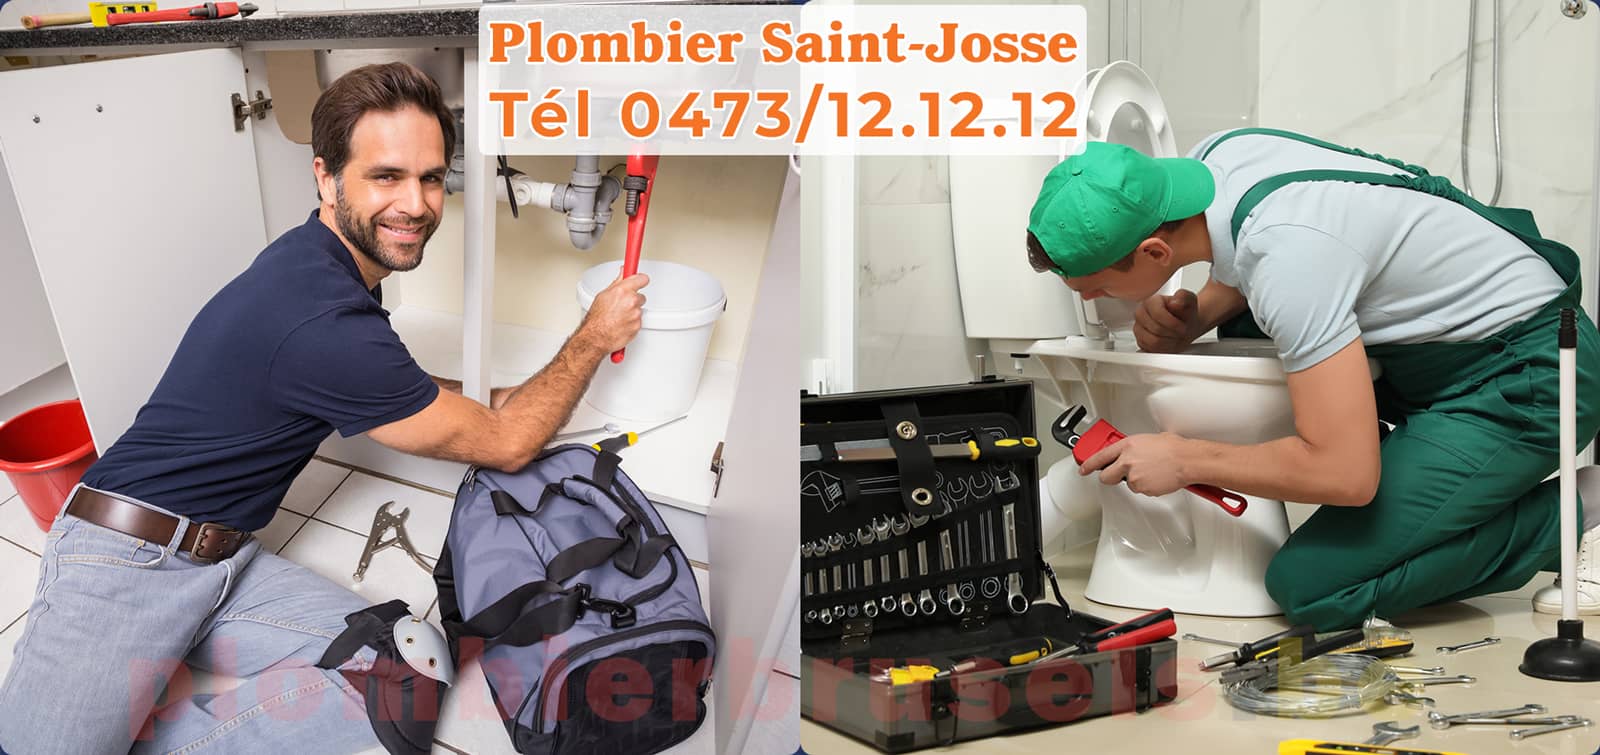 Plombier Saint-Josse service de Plomberie tél 0473/12.12.12